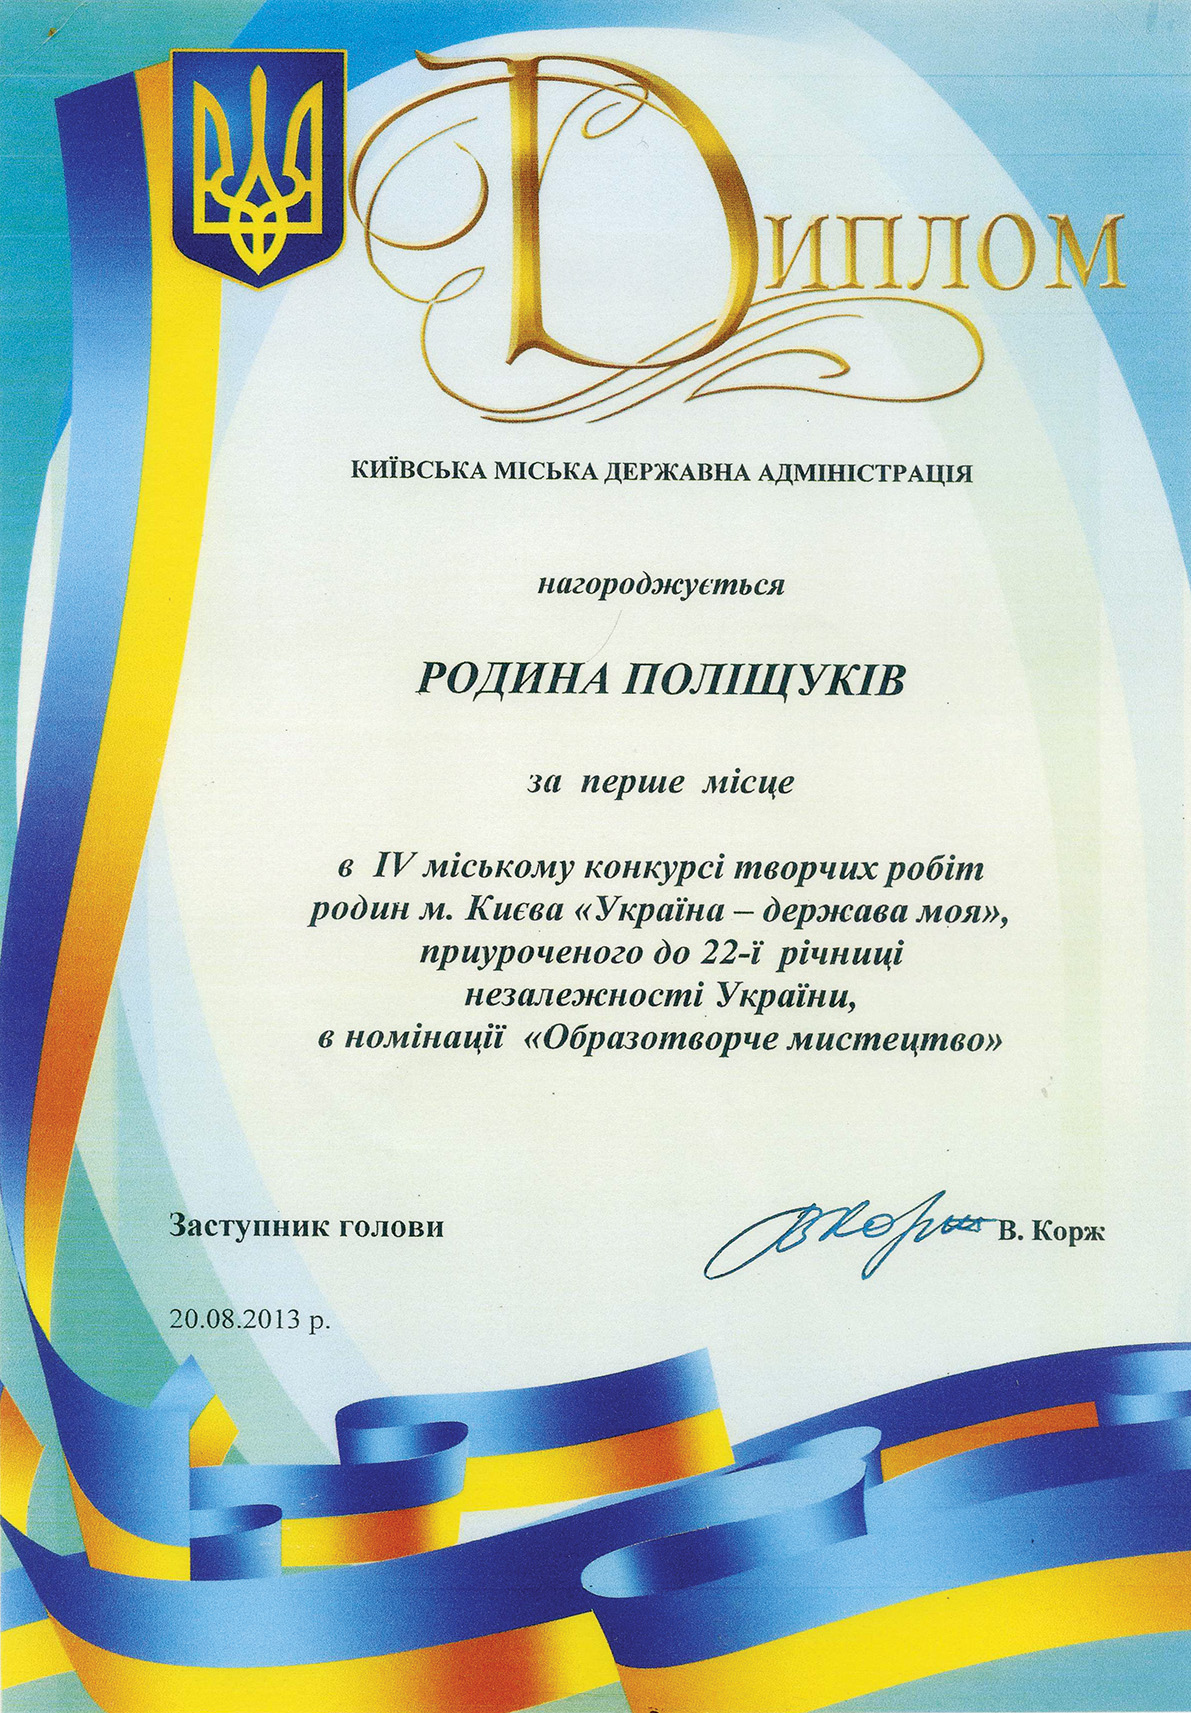 Mayya Polishchuk - Diplom 0.jpg